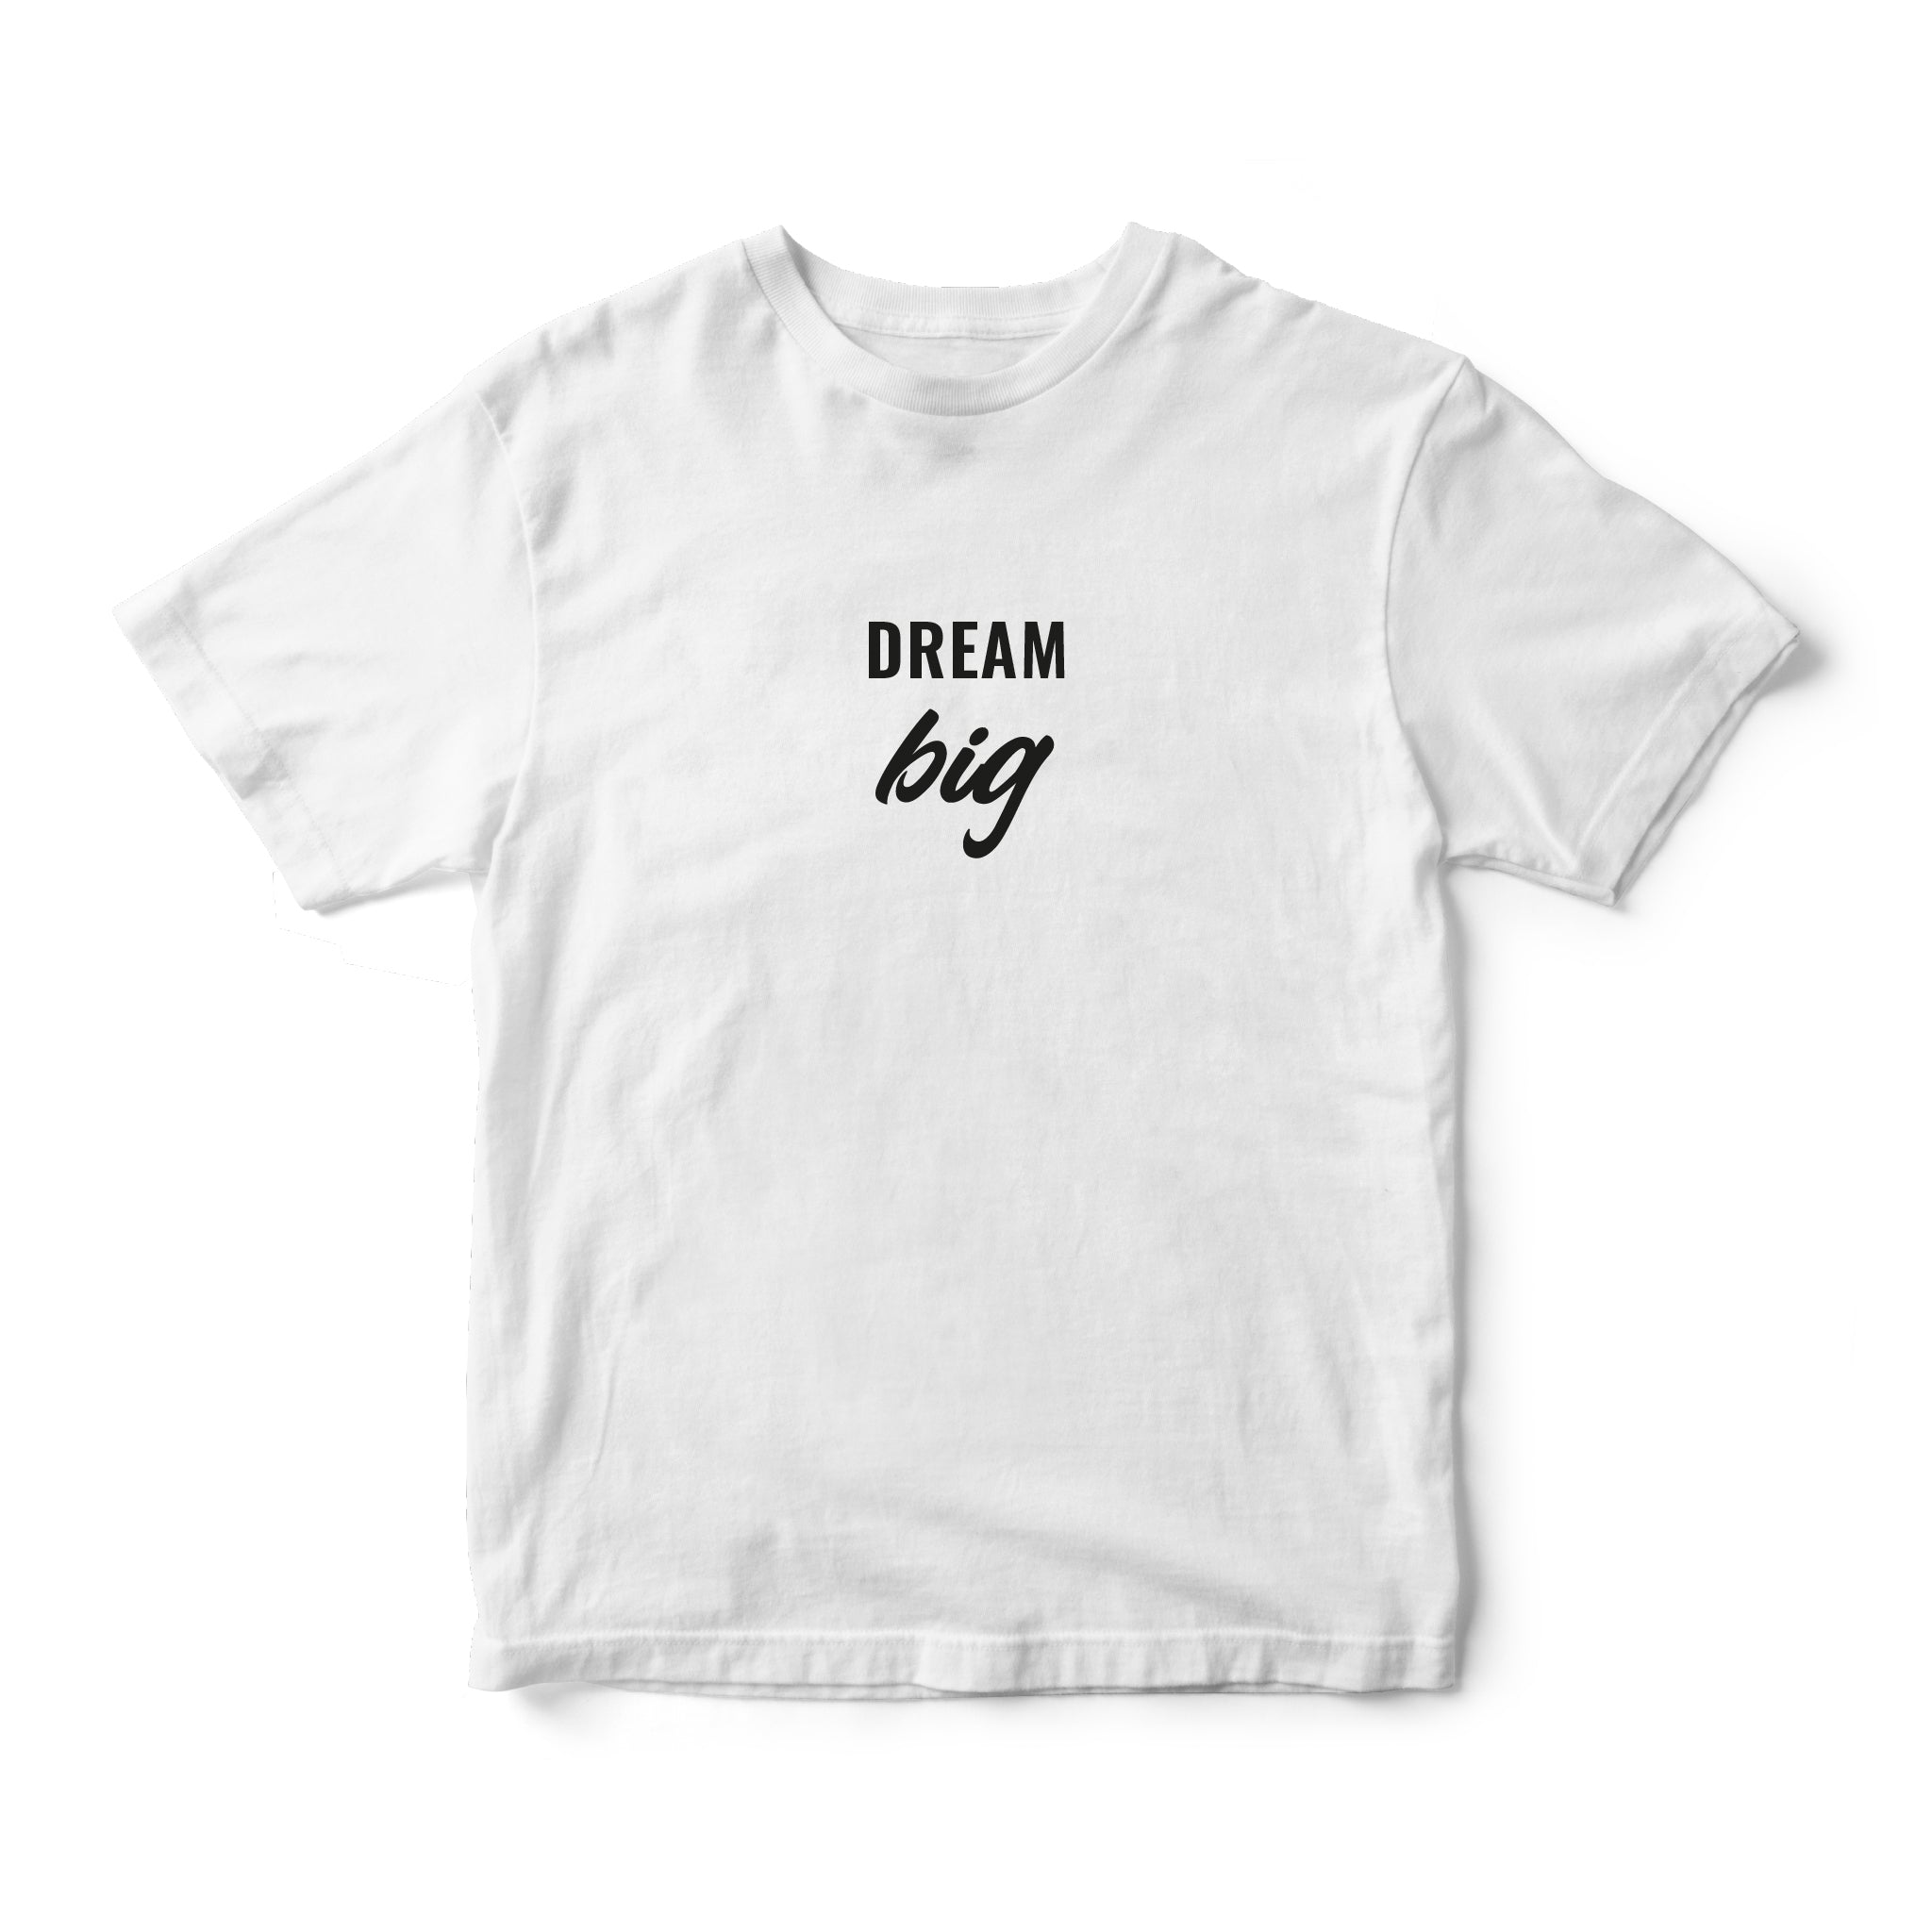 Instee Dream Big T-shirt Unisex 100% Cotton